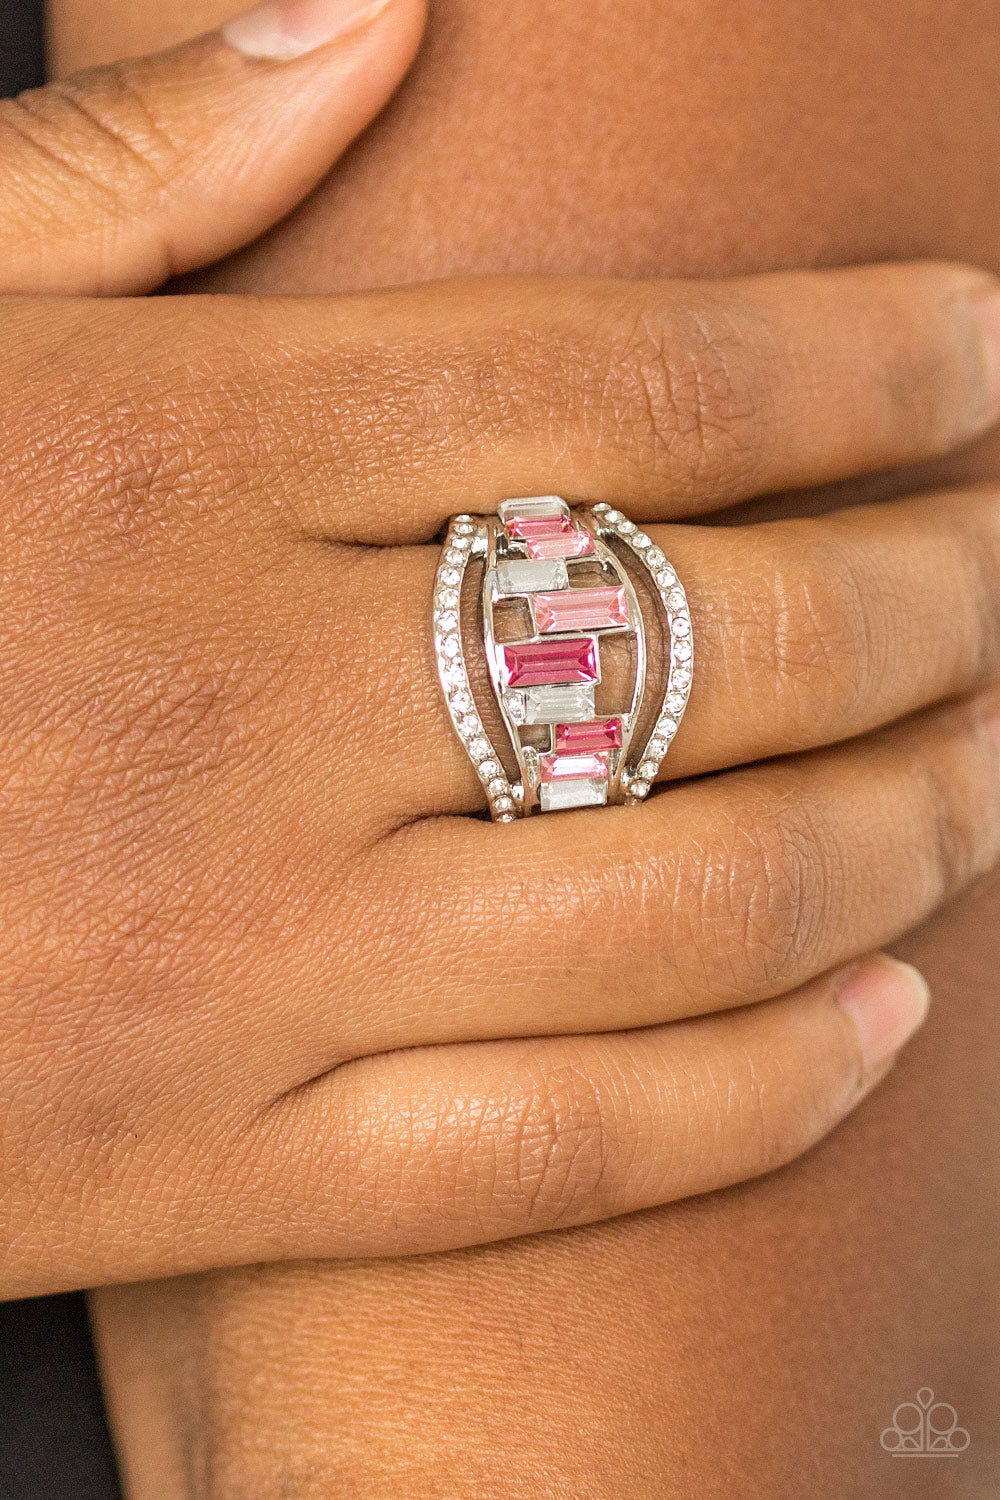 Treasure Chest Charm - Pink Paparazzi Ring